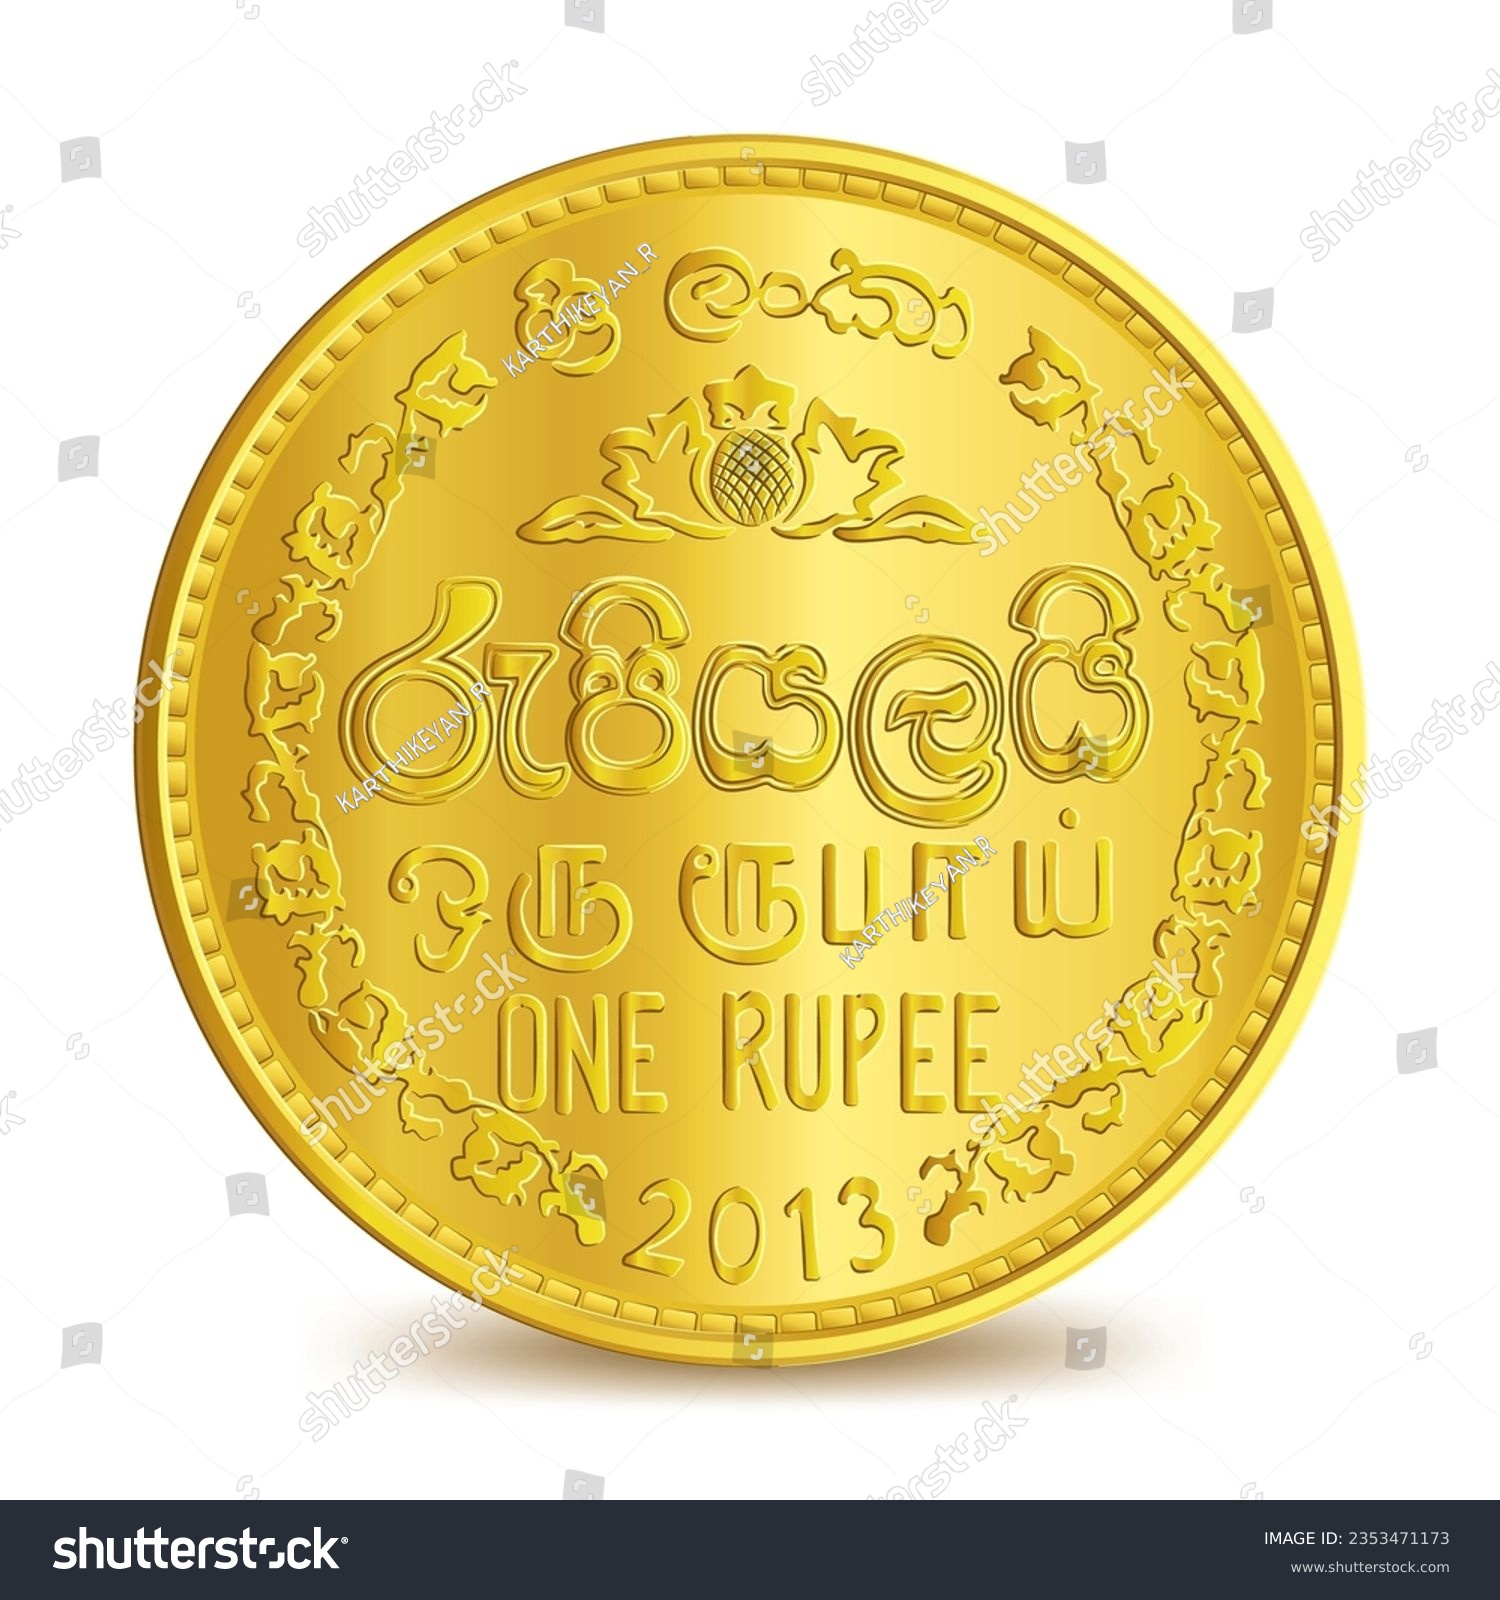 SVG of Golden Sri Lanka One Rupee coin isolated on white background in vector illustration. Translation: Sri Lanka, One Rupee. svg